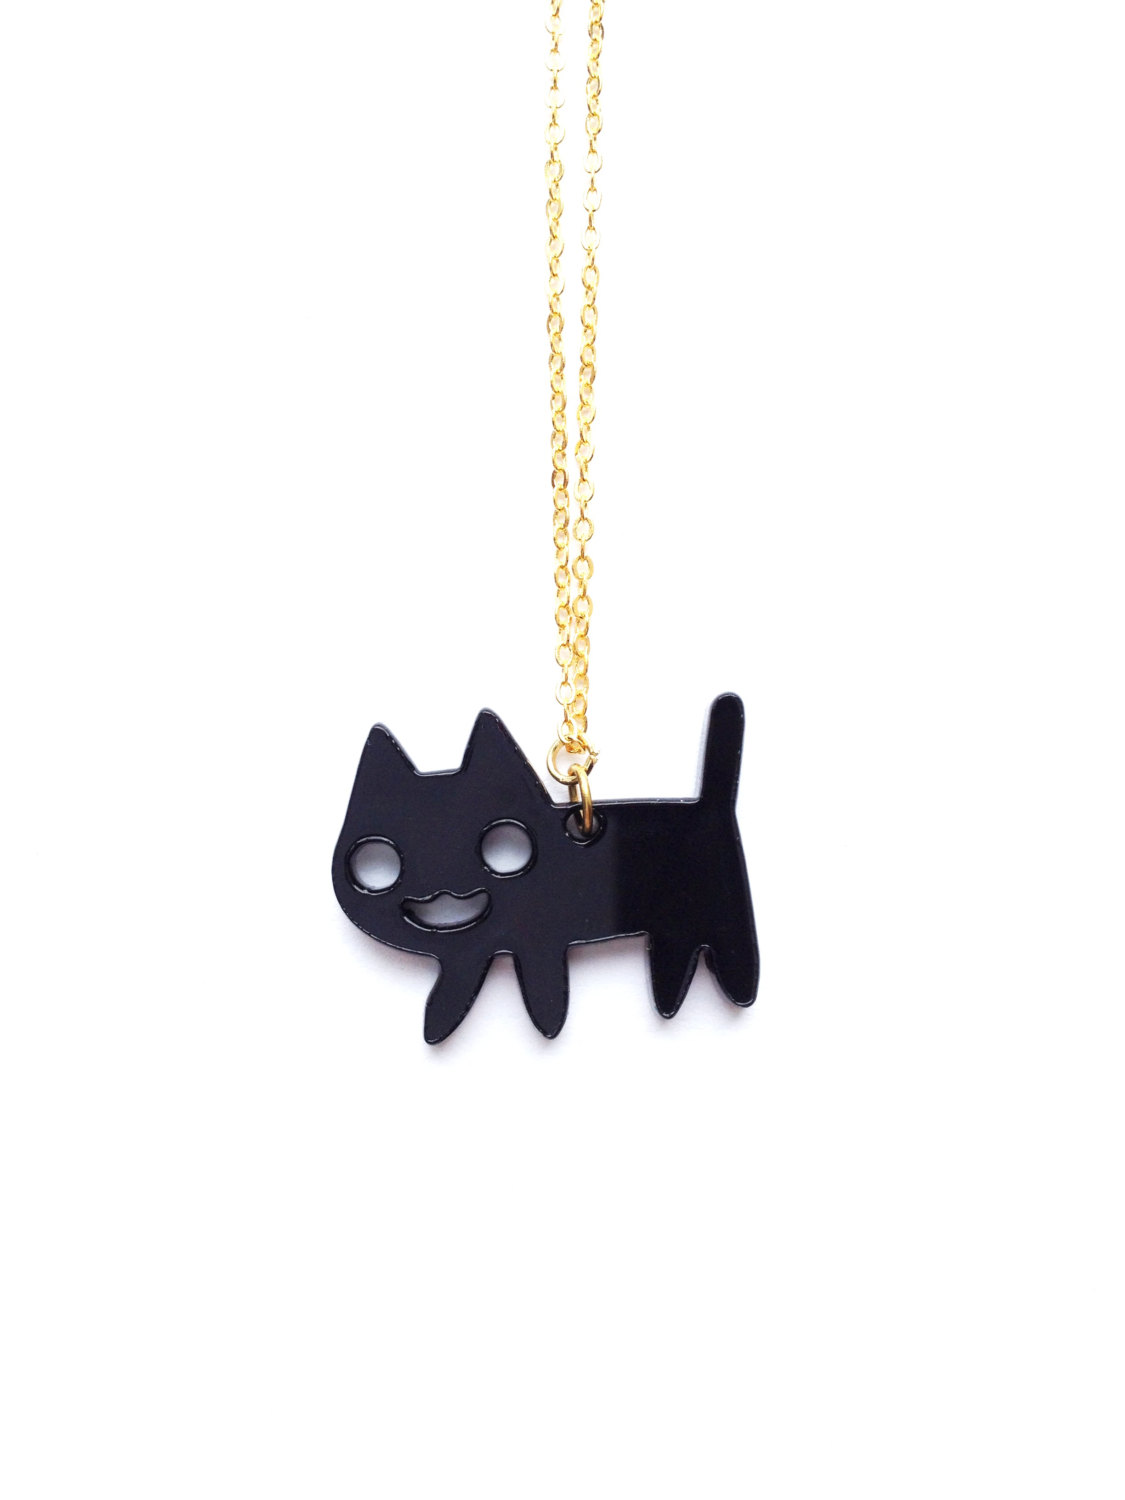 Cutie Black Cat Laser Cut Charm Gold Necklace Black :) Happy Kitty Cat ...